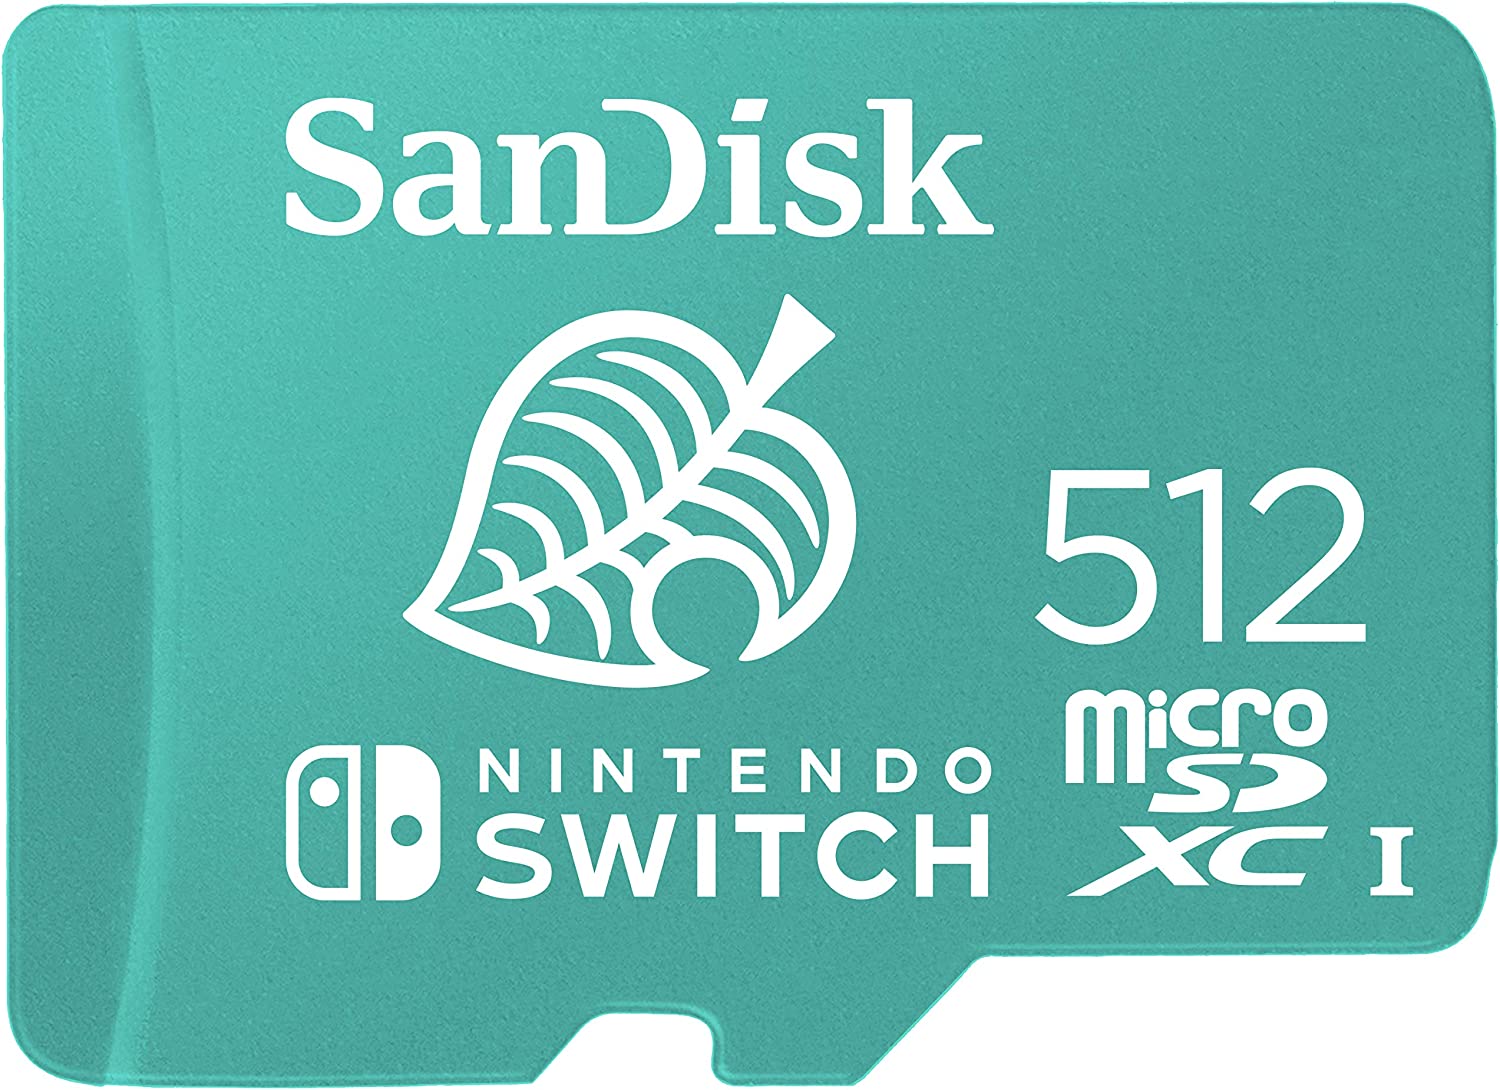 SanDisk Nintendo Switch-licensed microSD card, 512GB capacity.